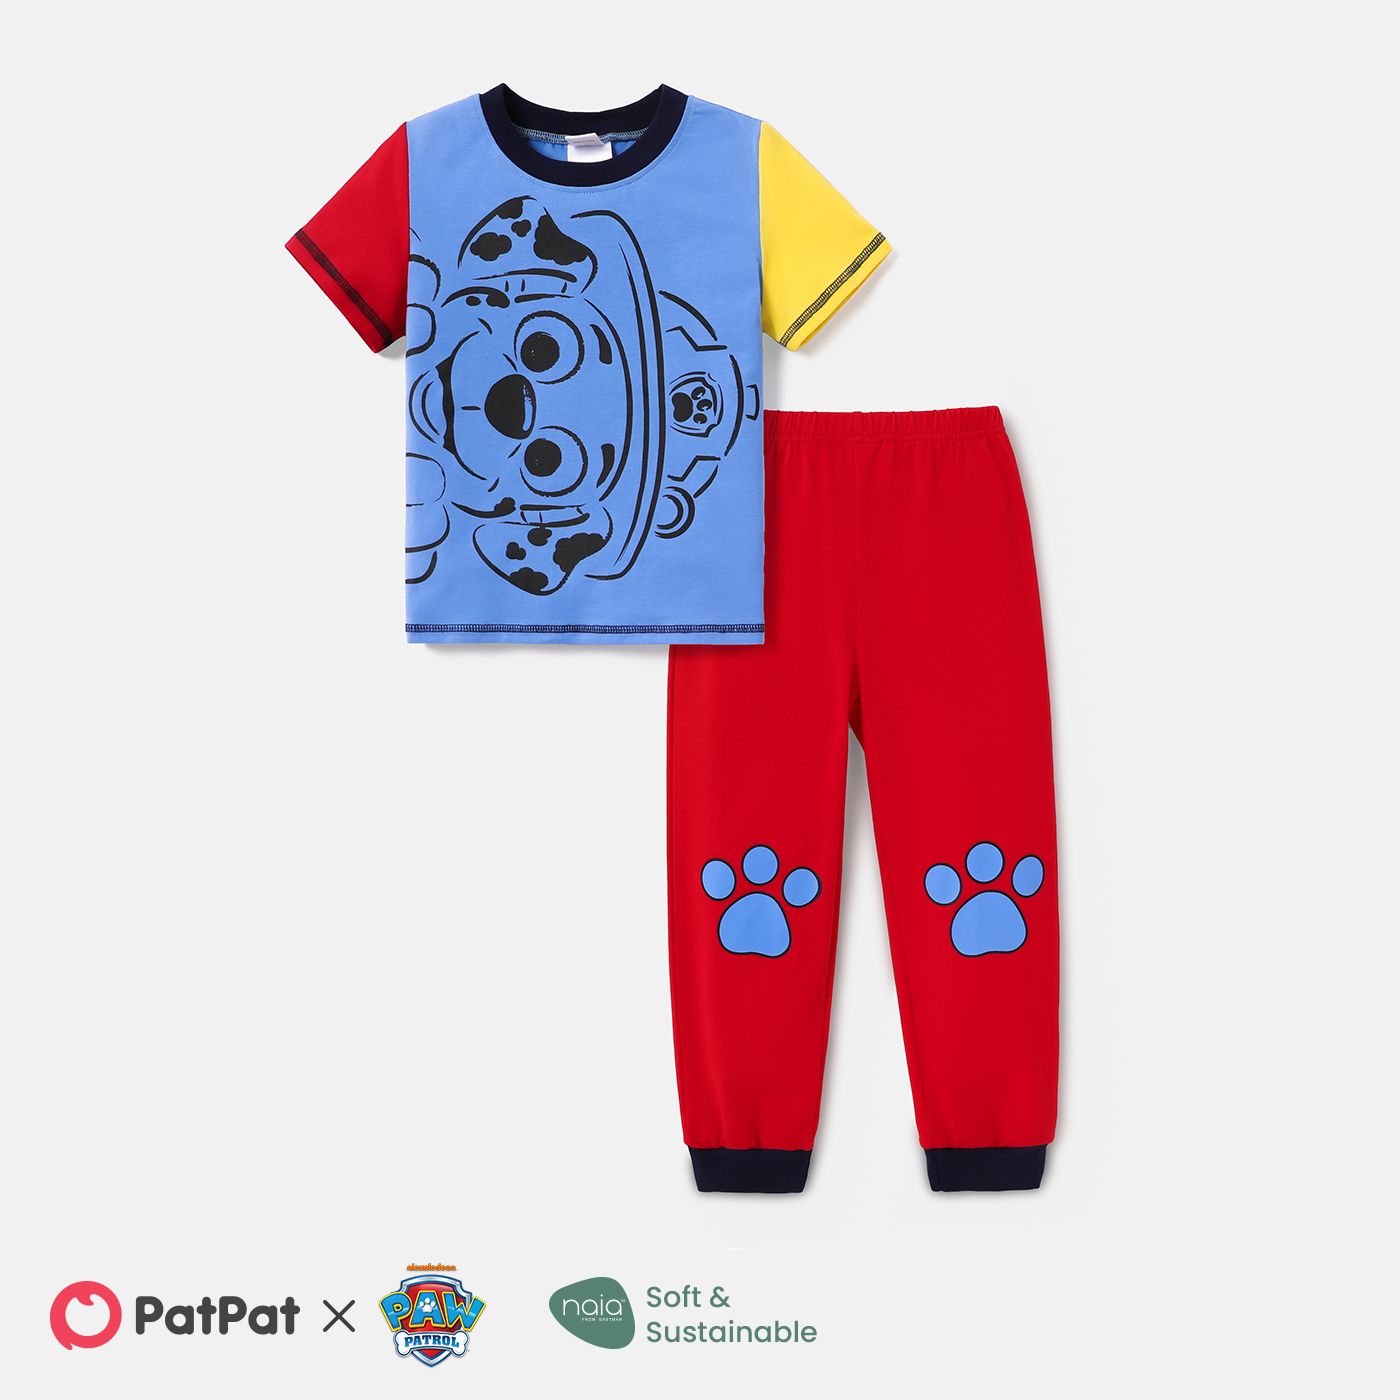 PAW Patrol Toddler Boy 2pcs Cotton Character Print Colorblock Short-sleeve Tee and Pants Set